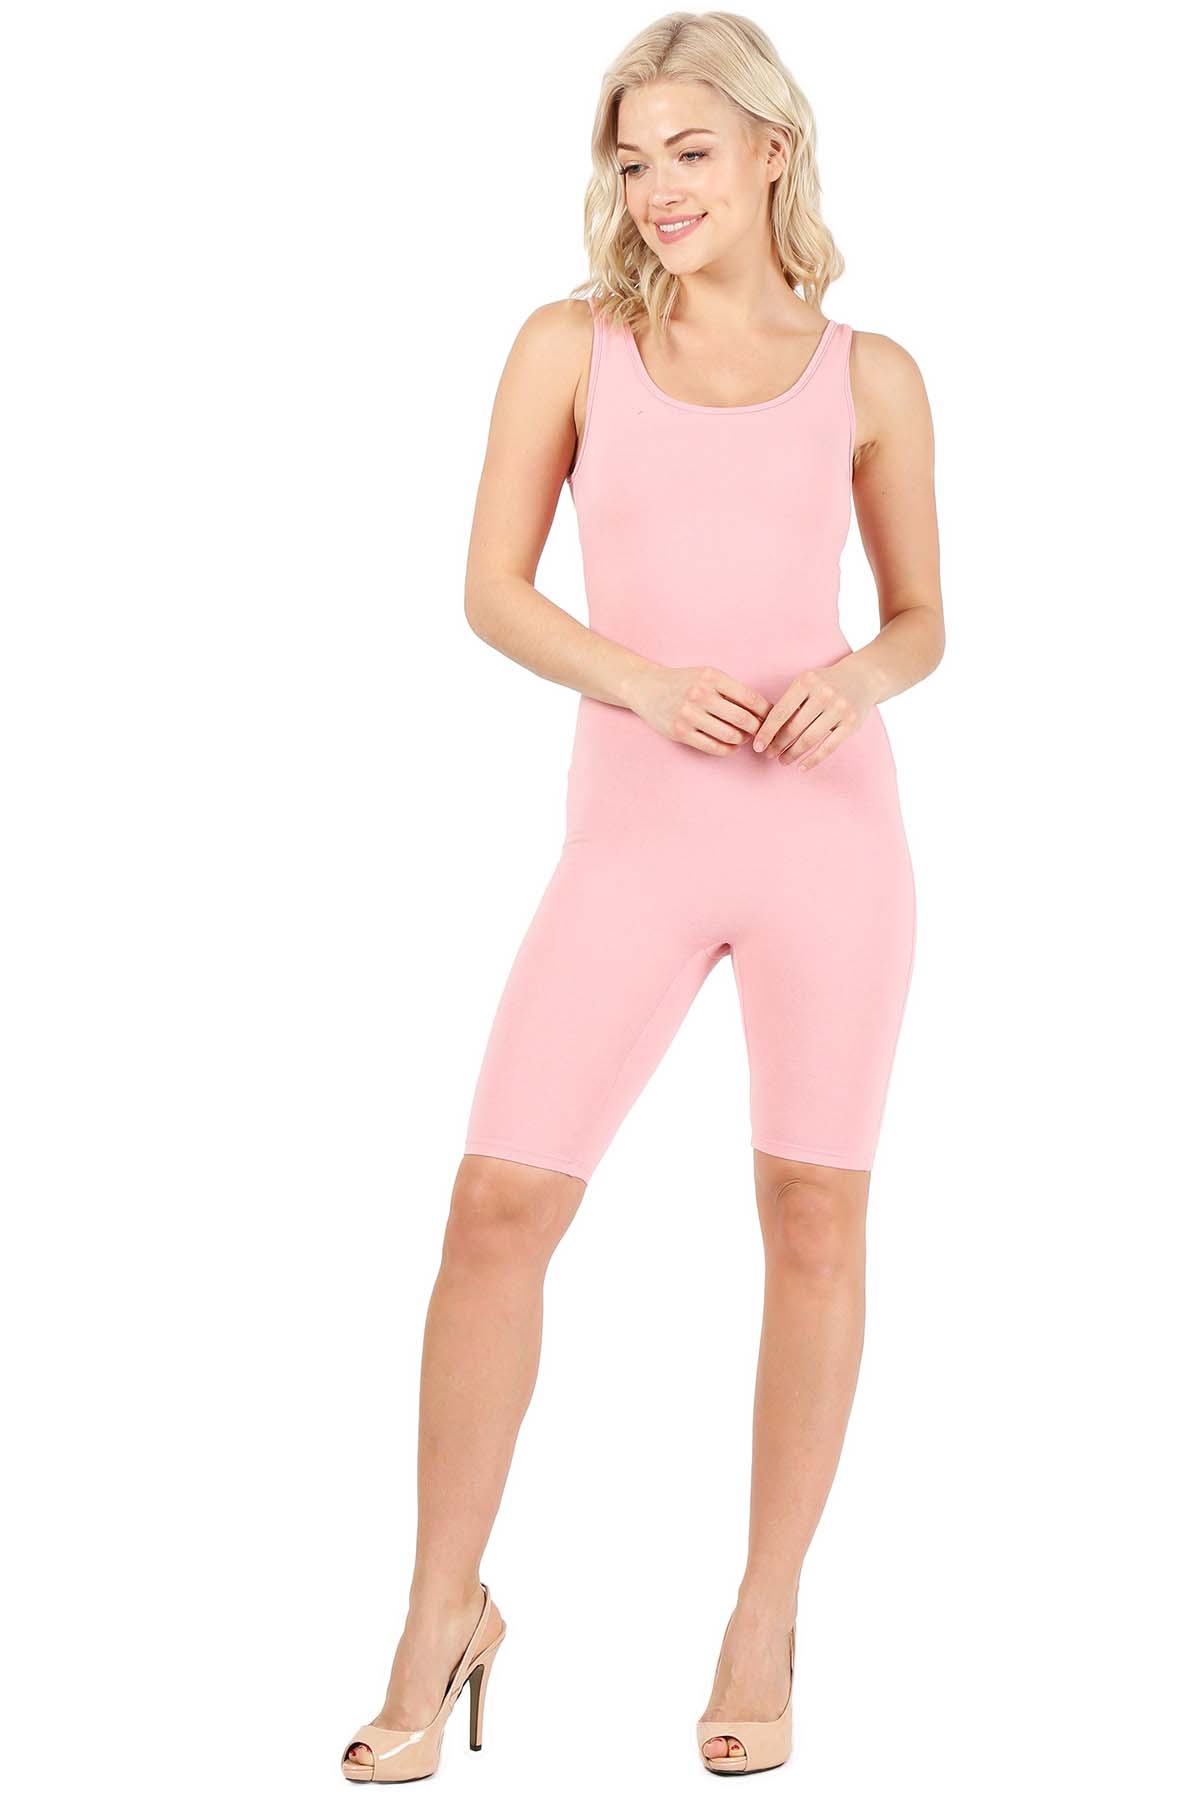 Wholesale Pink USA Basic Cotton Thigh High Jumpsuit